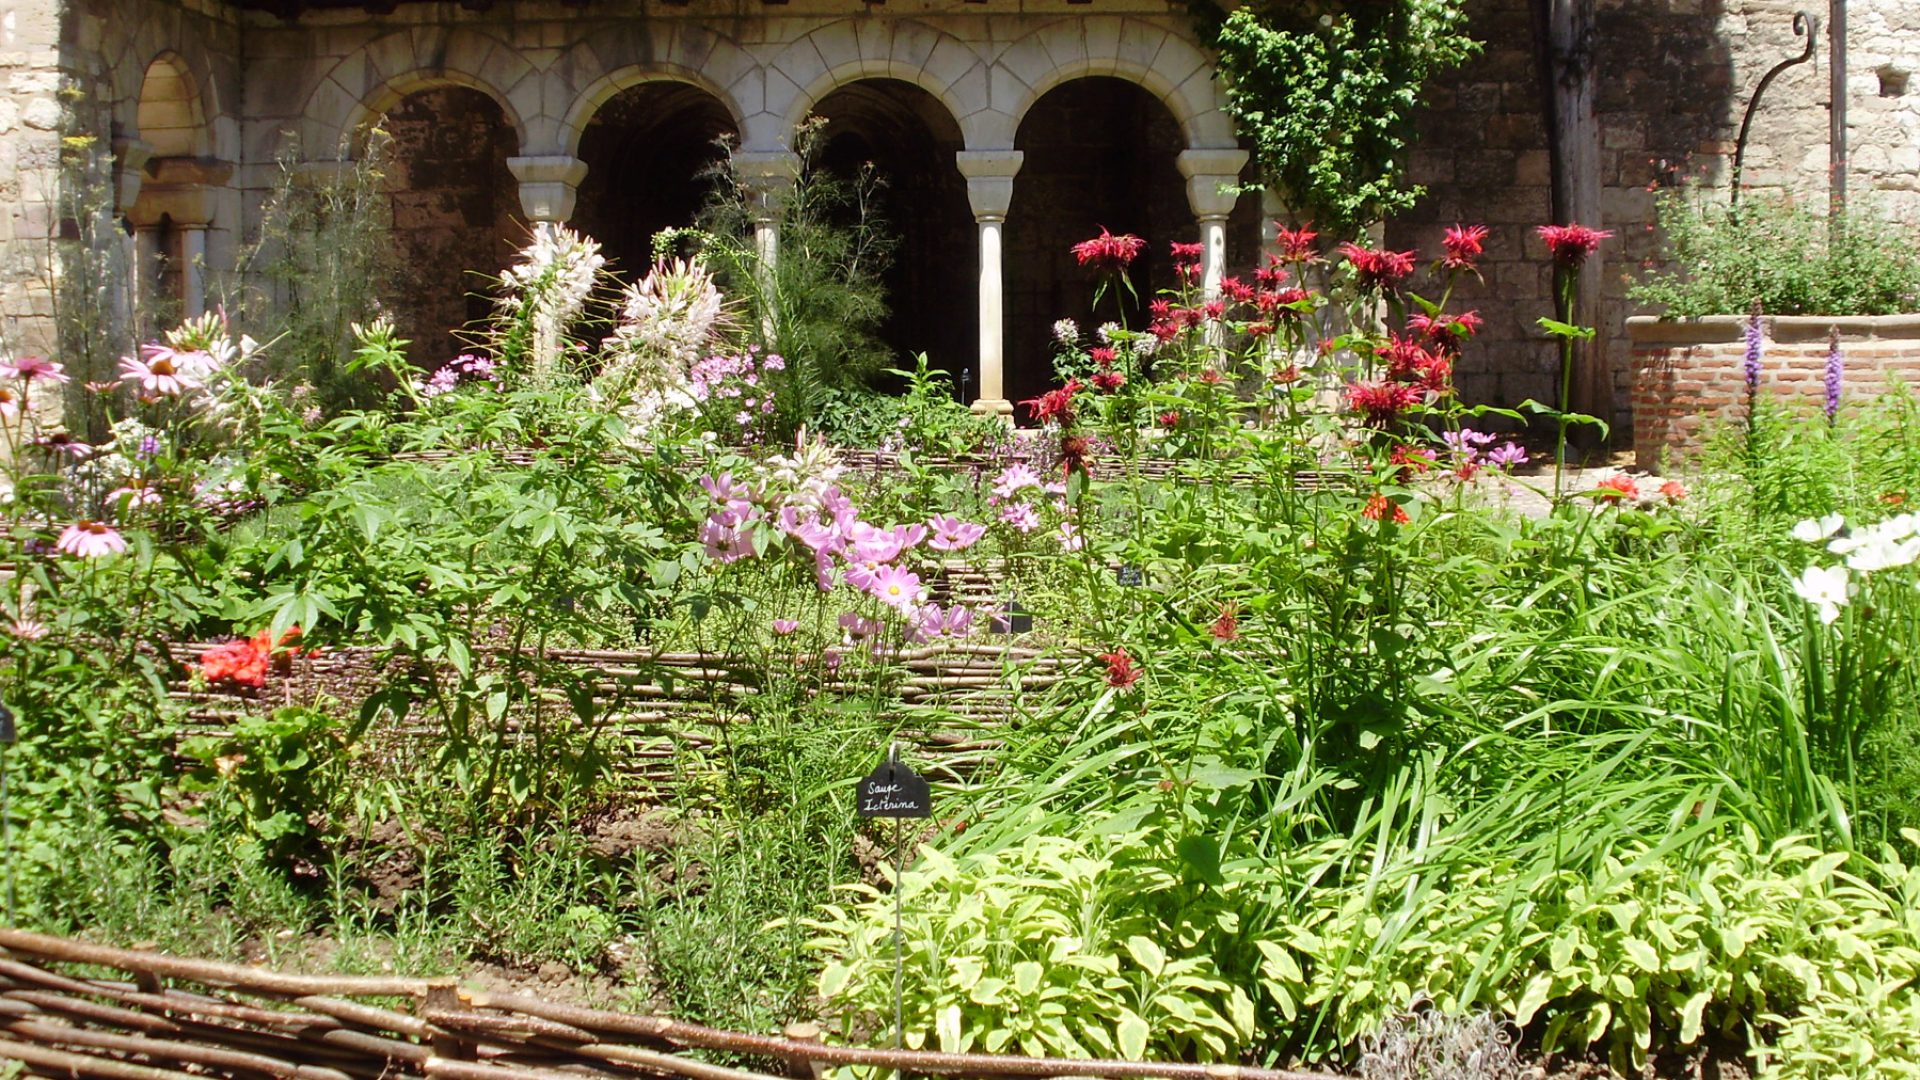 Albi Saint-Salvi 回廊の庭 - ハーブの庭